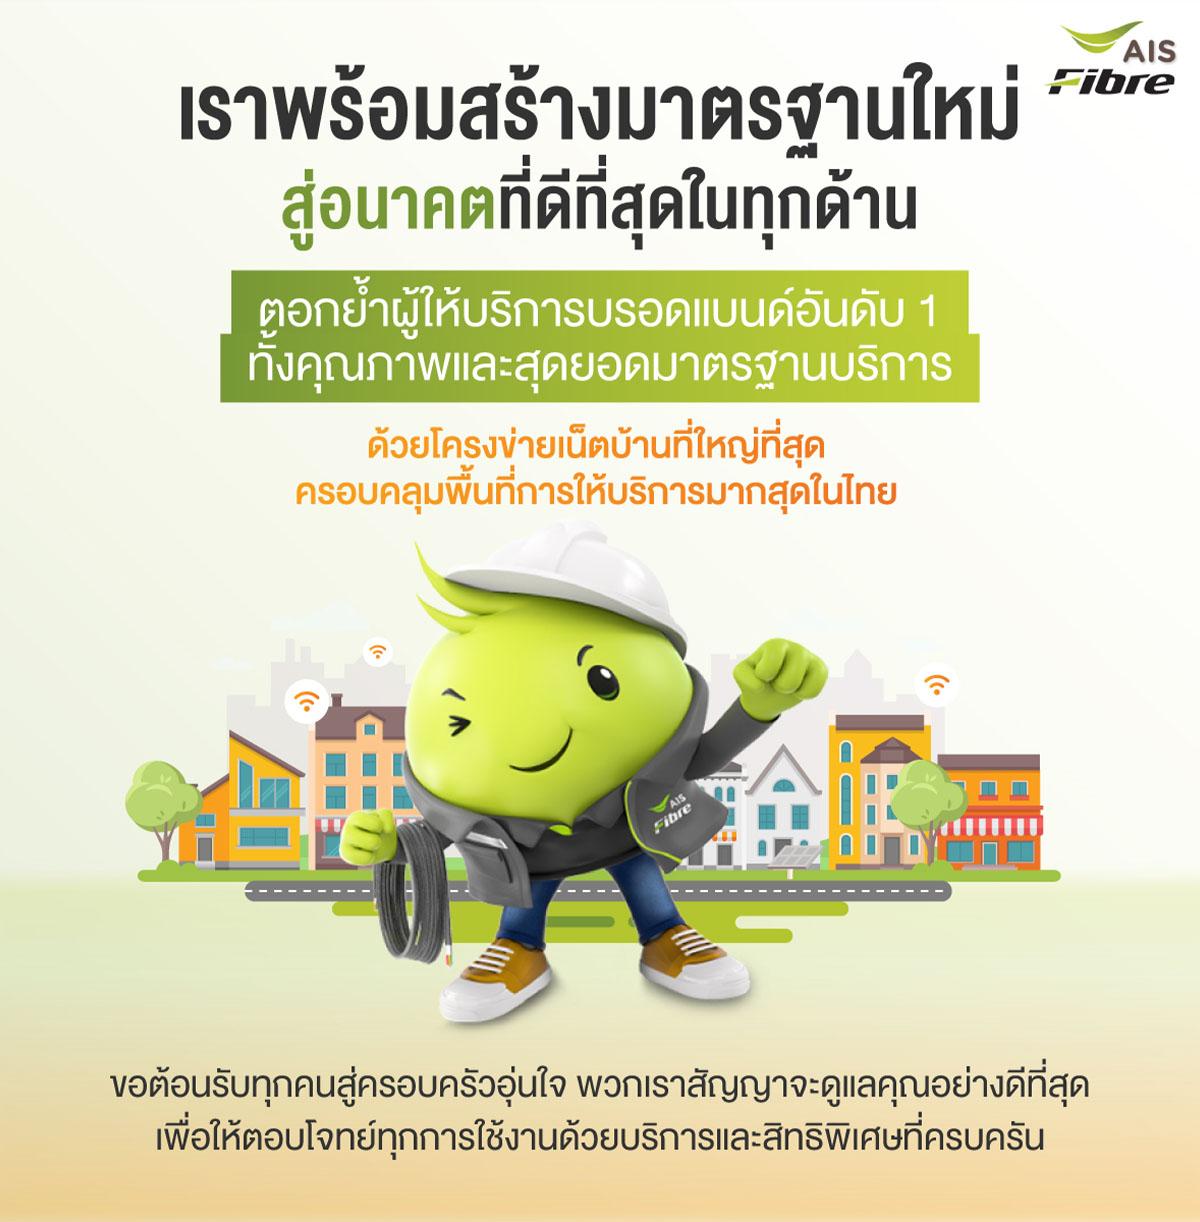 ais-tttbb-3bb-digital-economy-fibre-internet-thailand-SPACEBAR-Photo01.jpg